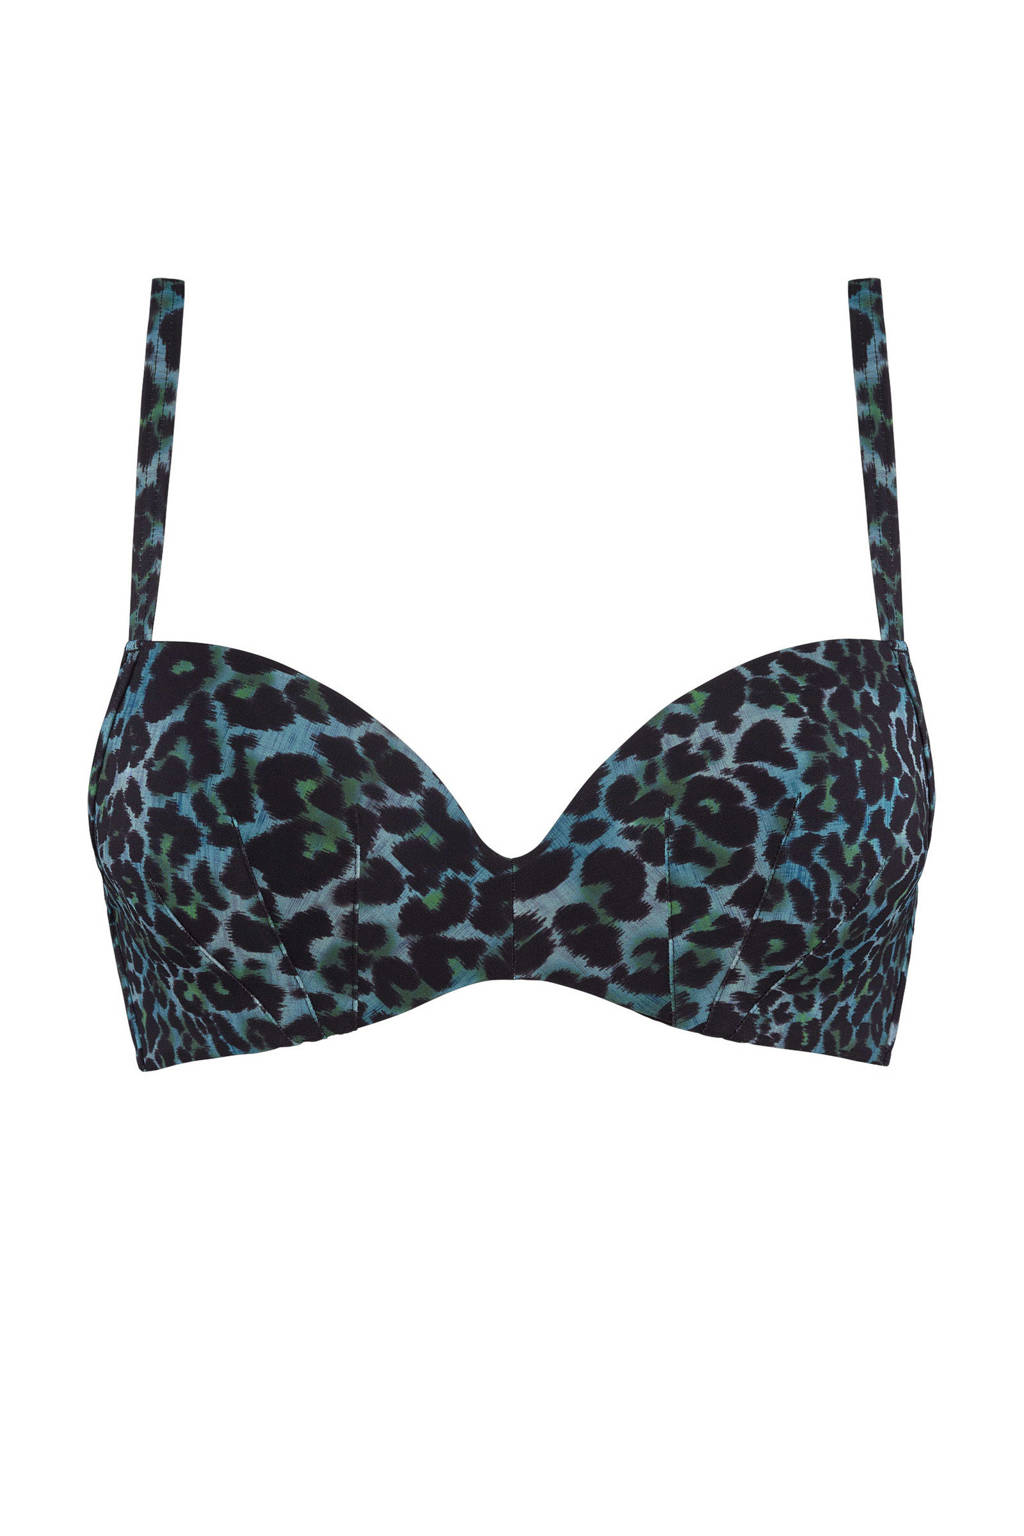 marlies dekkers push-up bikinitop Panthera blauw/zwart